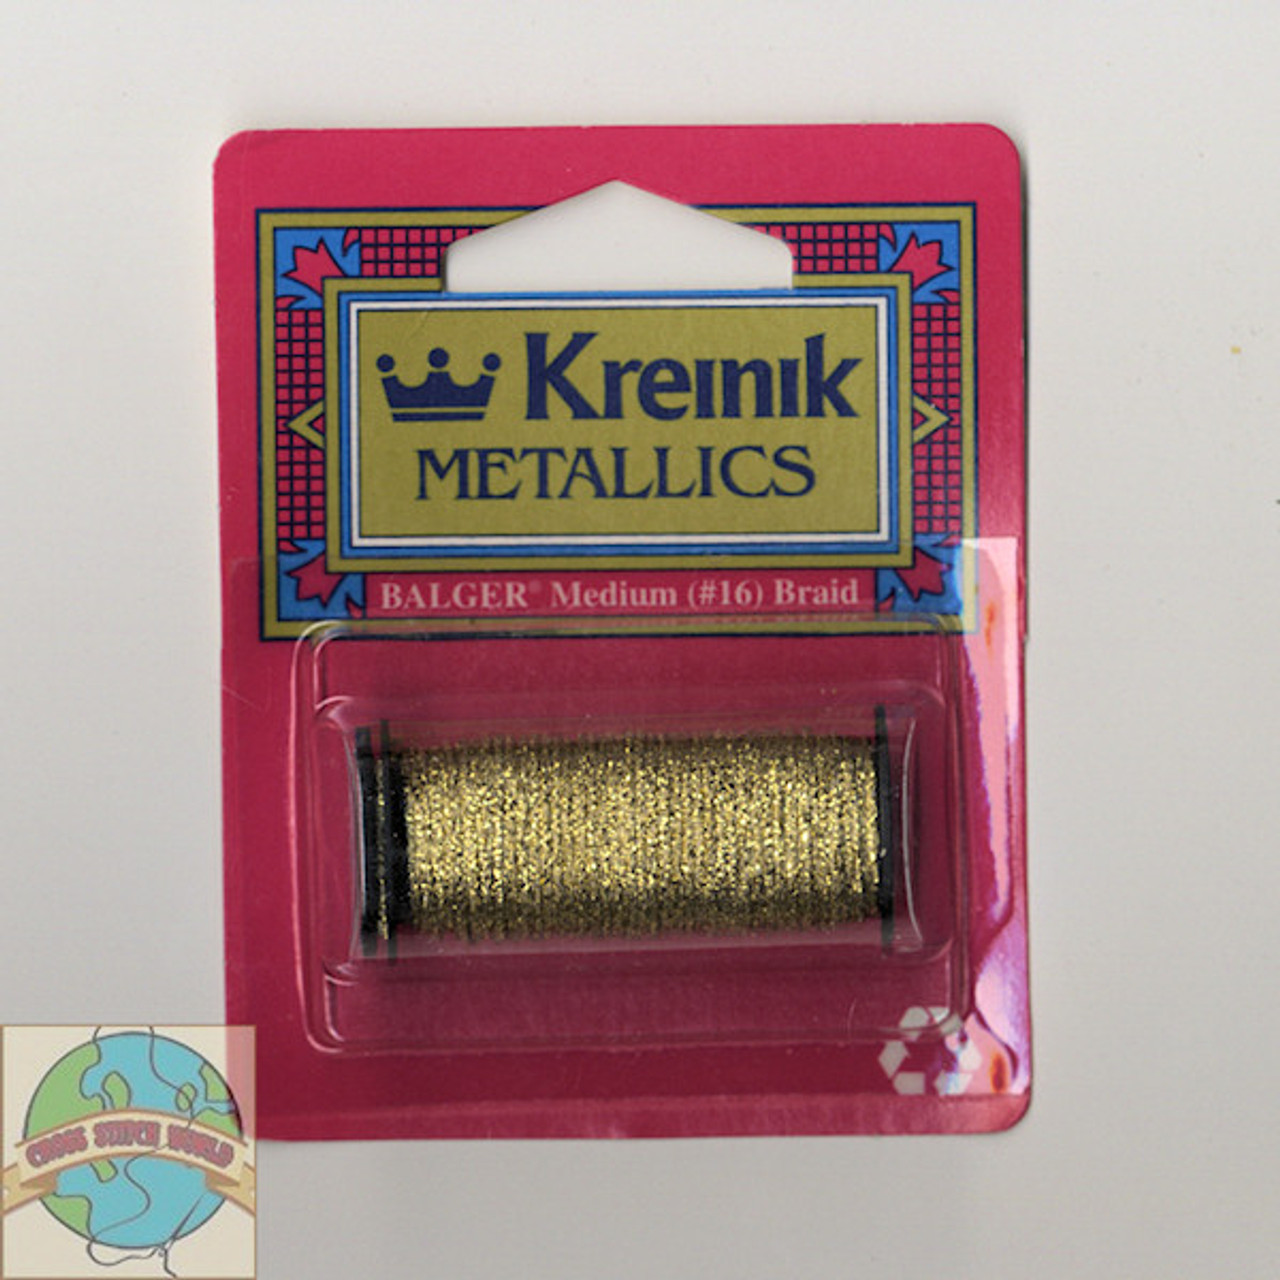 Kreinik Metallics - Medium #16 Gold #002